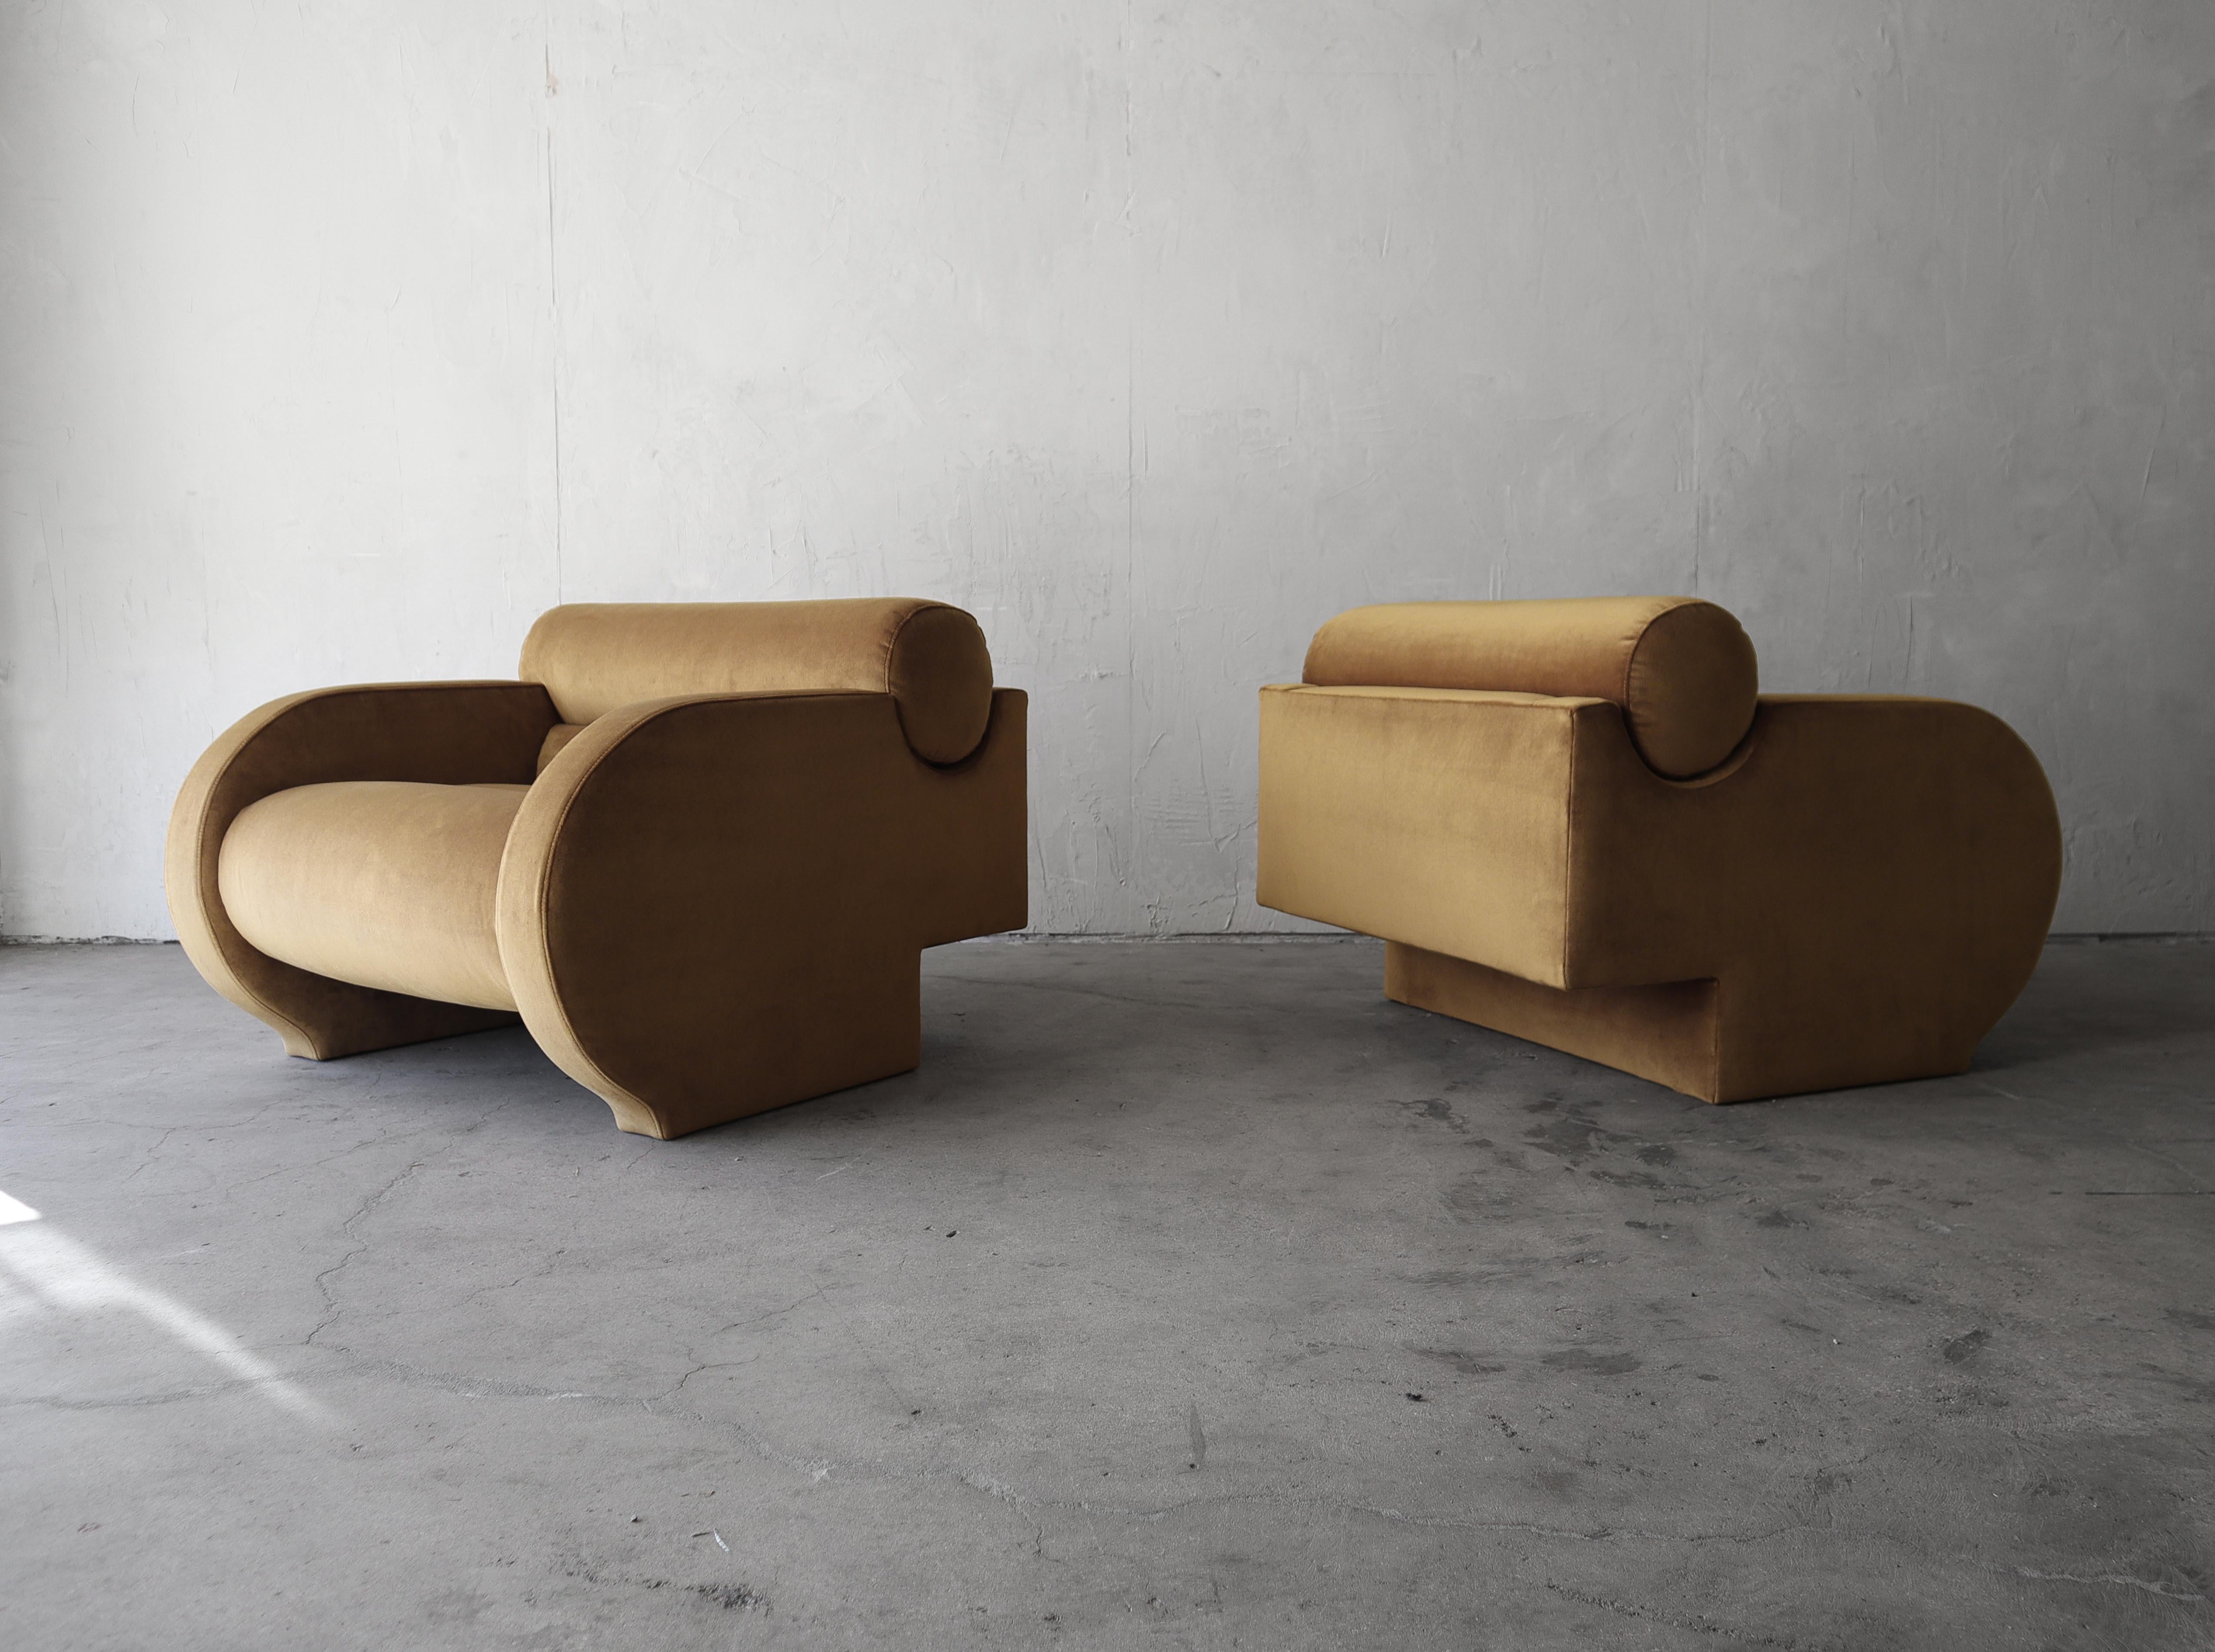 Post-Modern Pair of Sculptural Post Modern Lounge Chairs by Vladimir Kagan